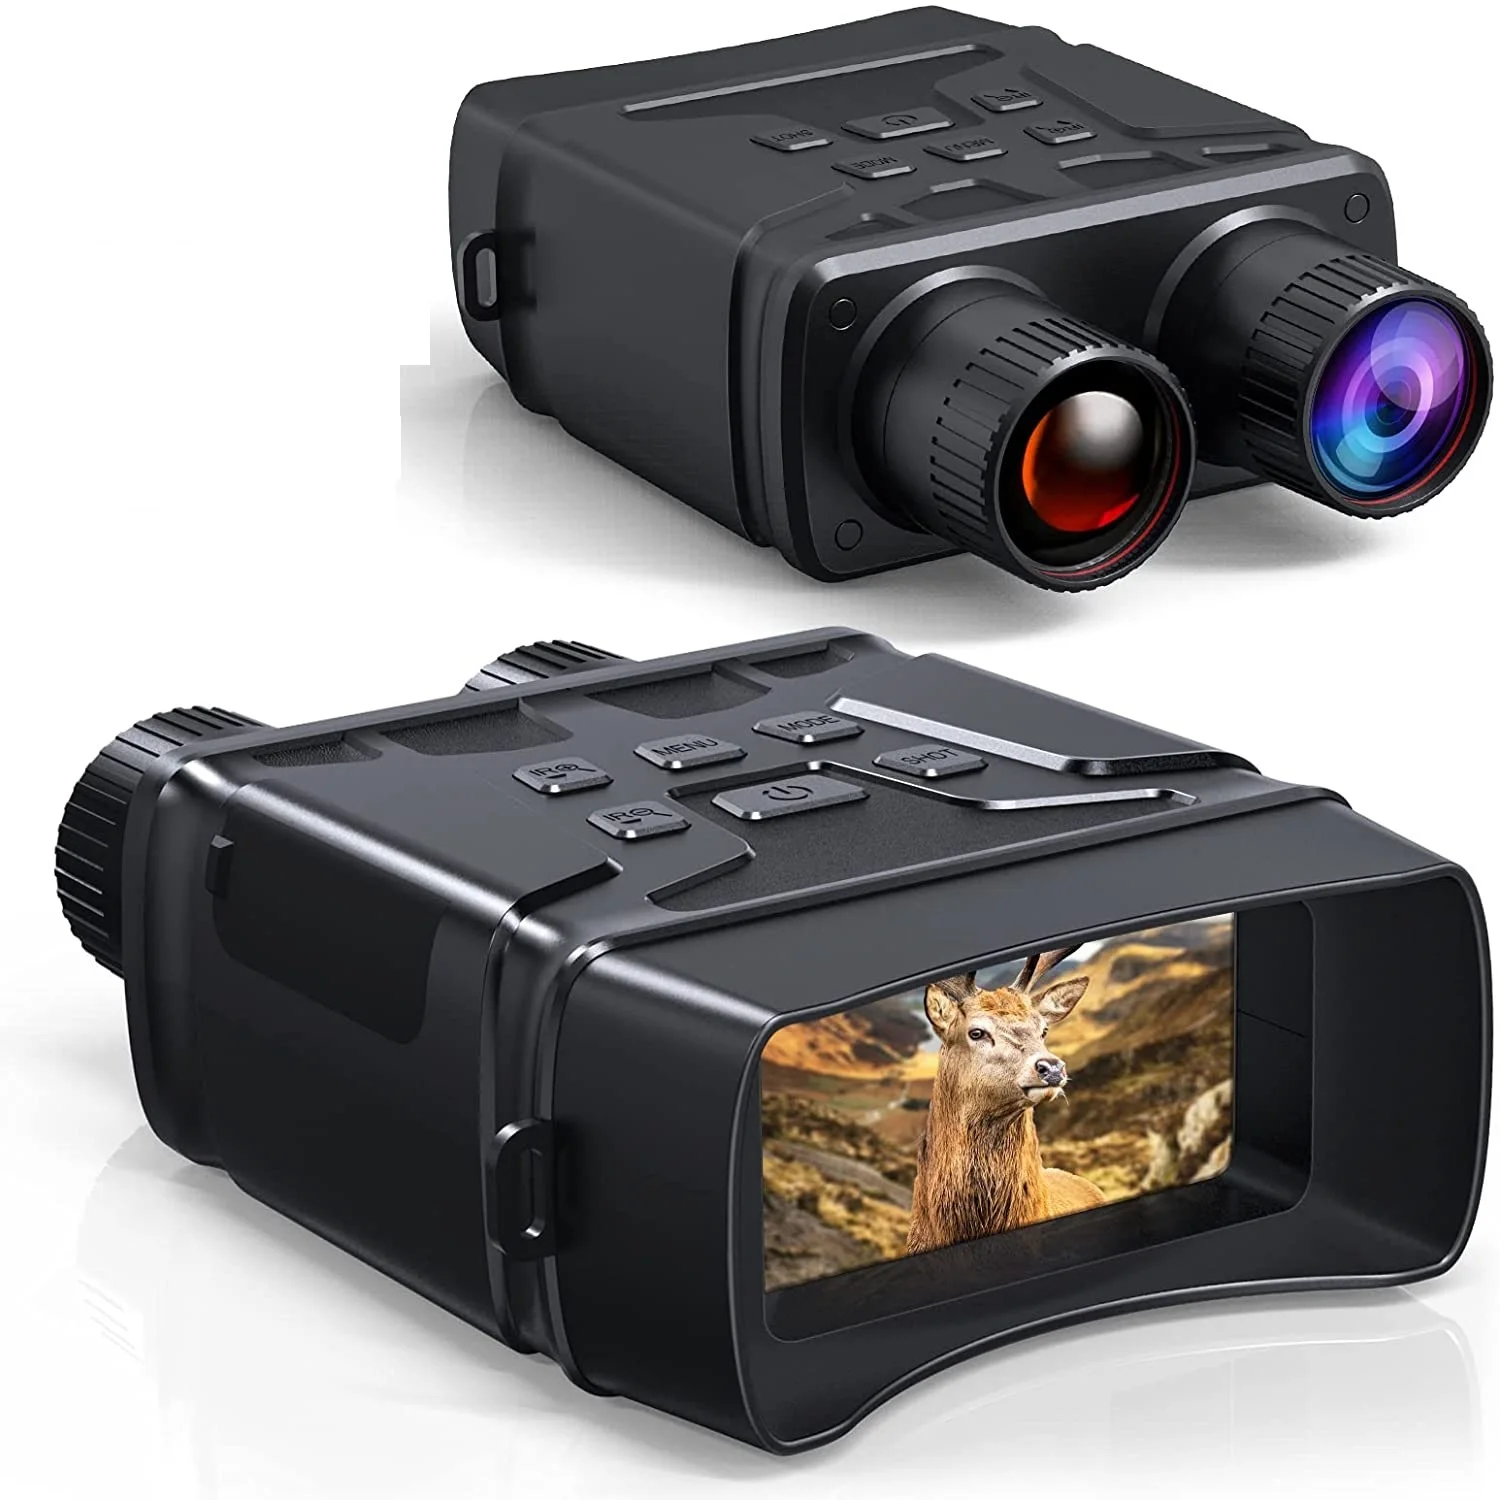 Night Digital Binoculars for Complete Darkness Infrared Digital Hunting Telescope Camp Photography Video Surveillance spy R6